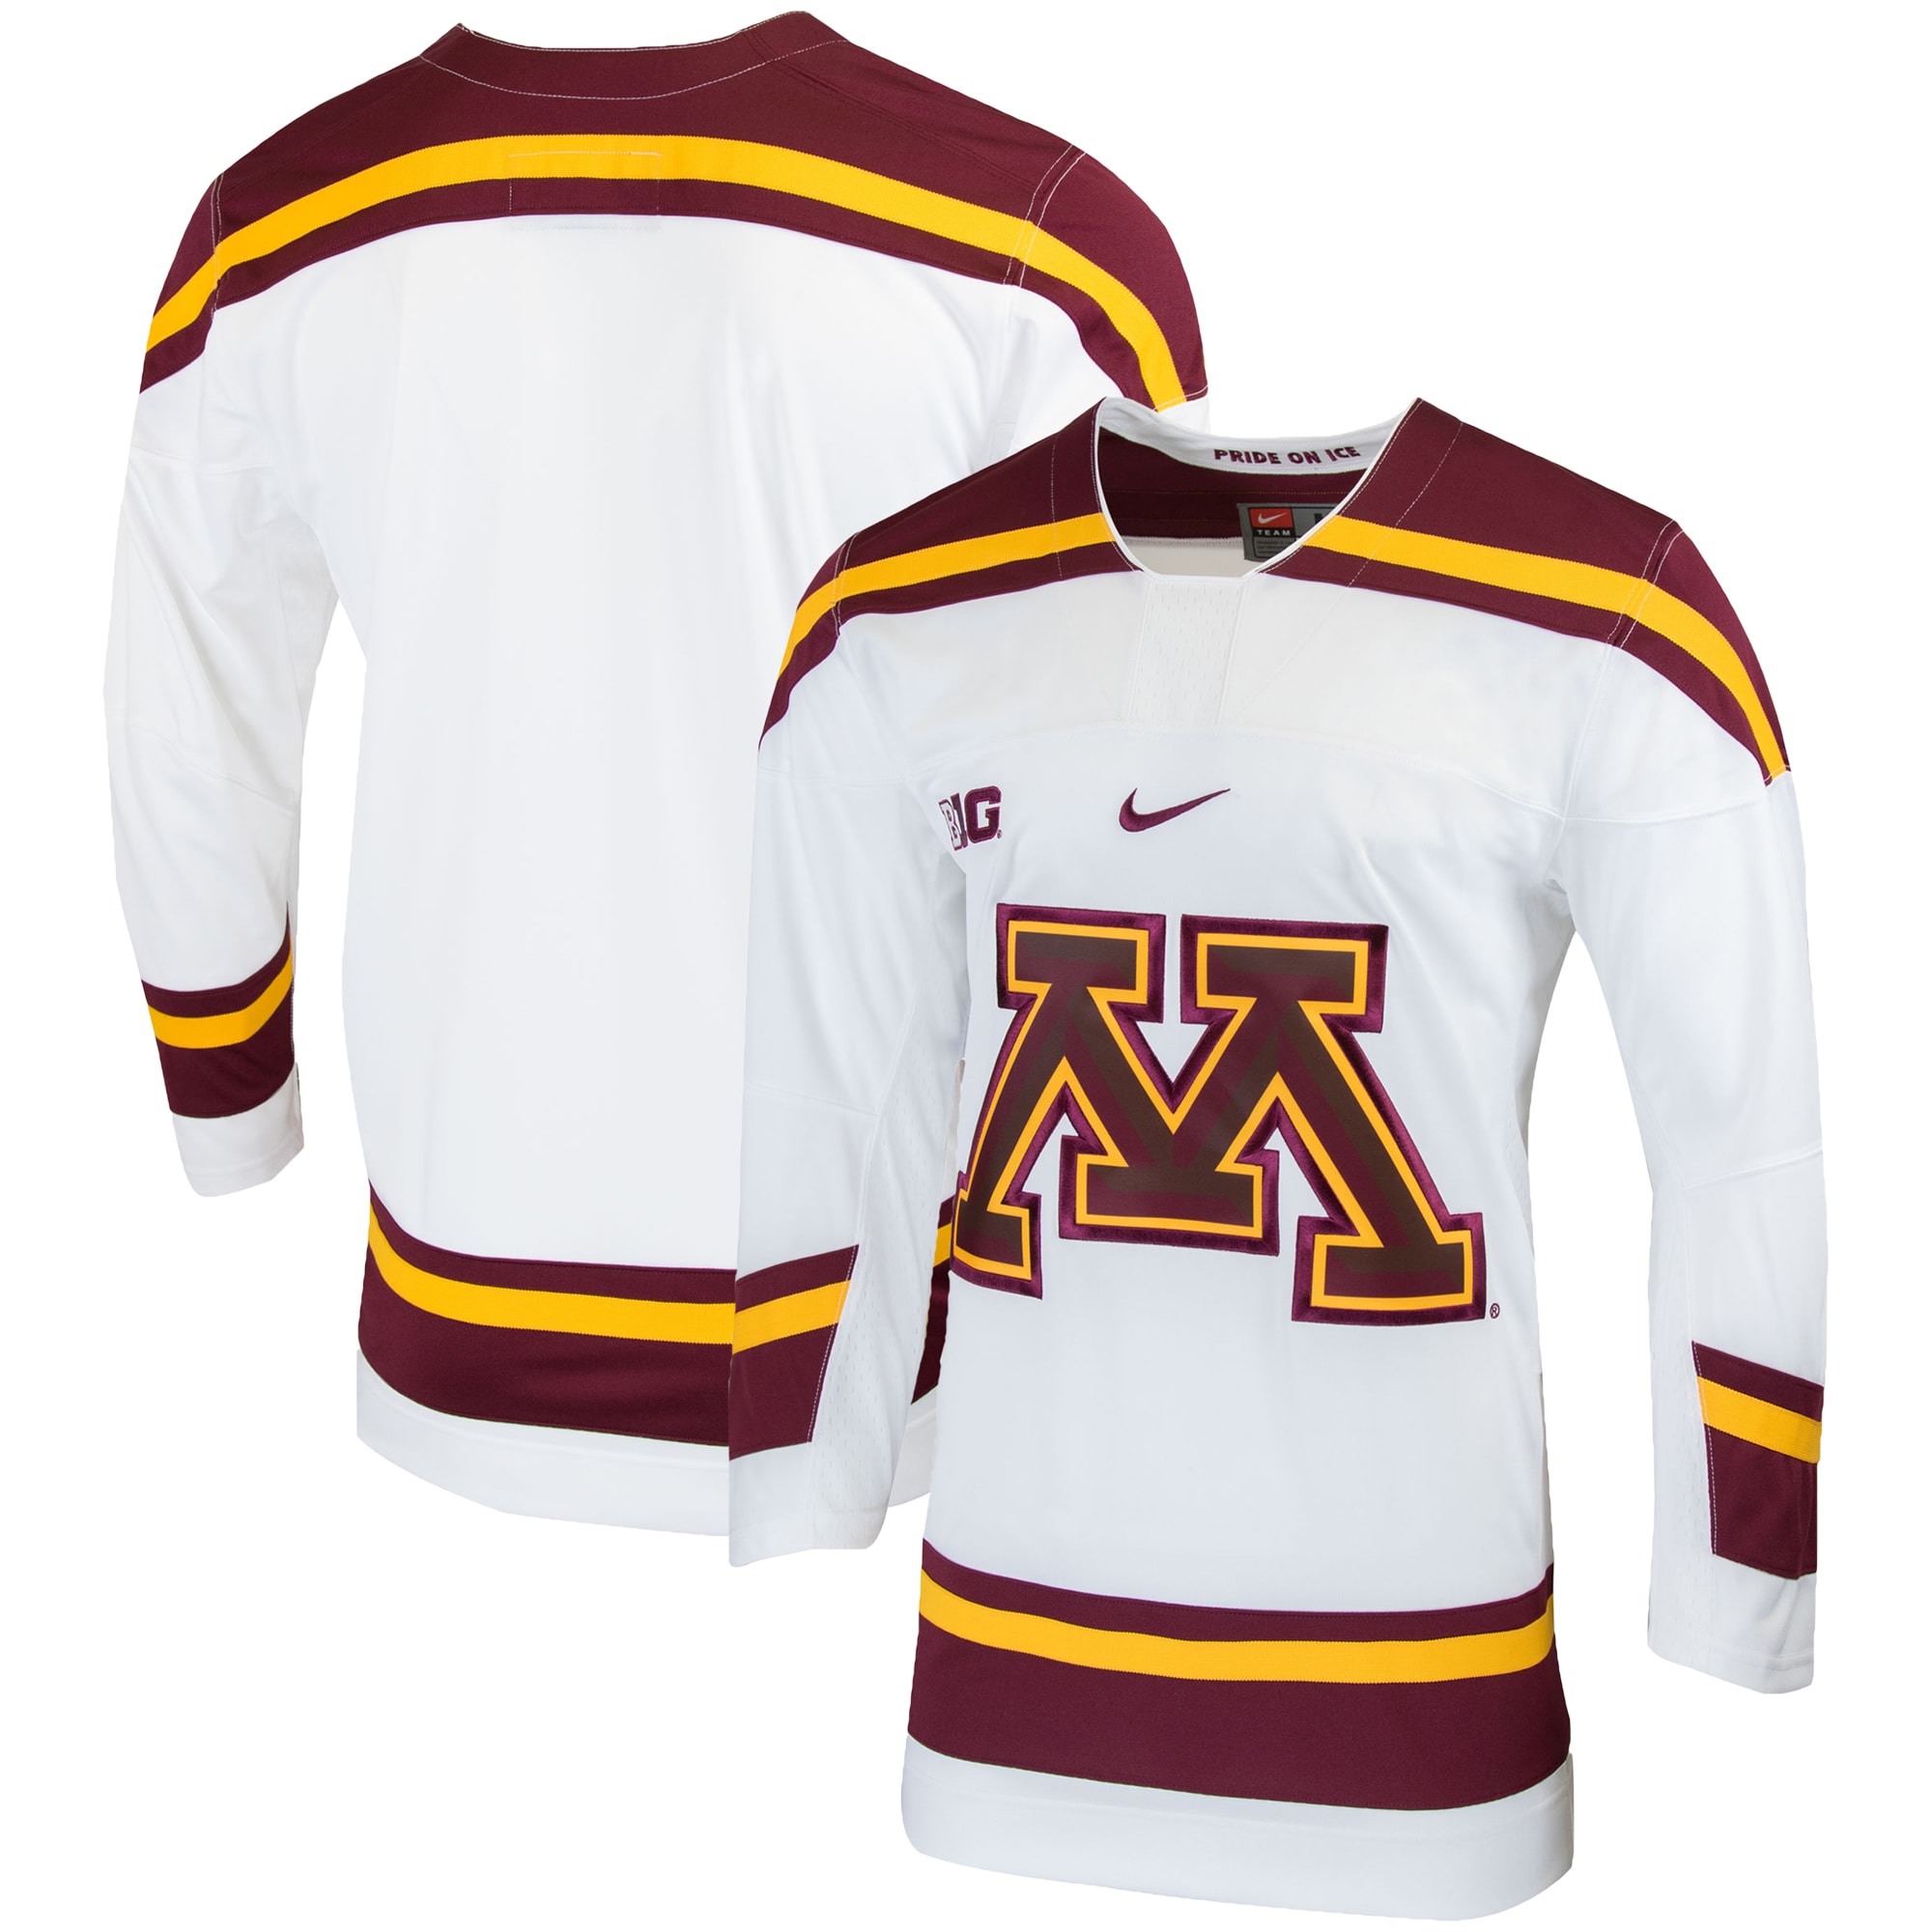 Minnesota Golden Gophers Replica College Hockey Jersey - White For Youth Women Men